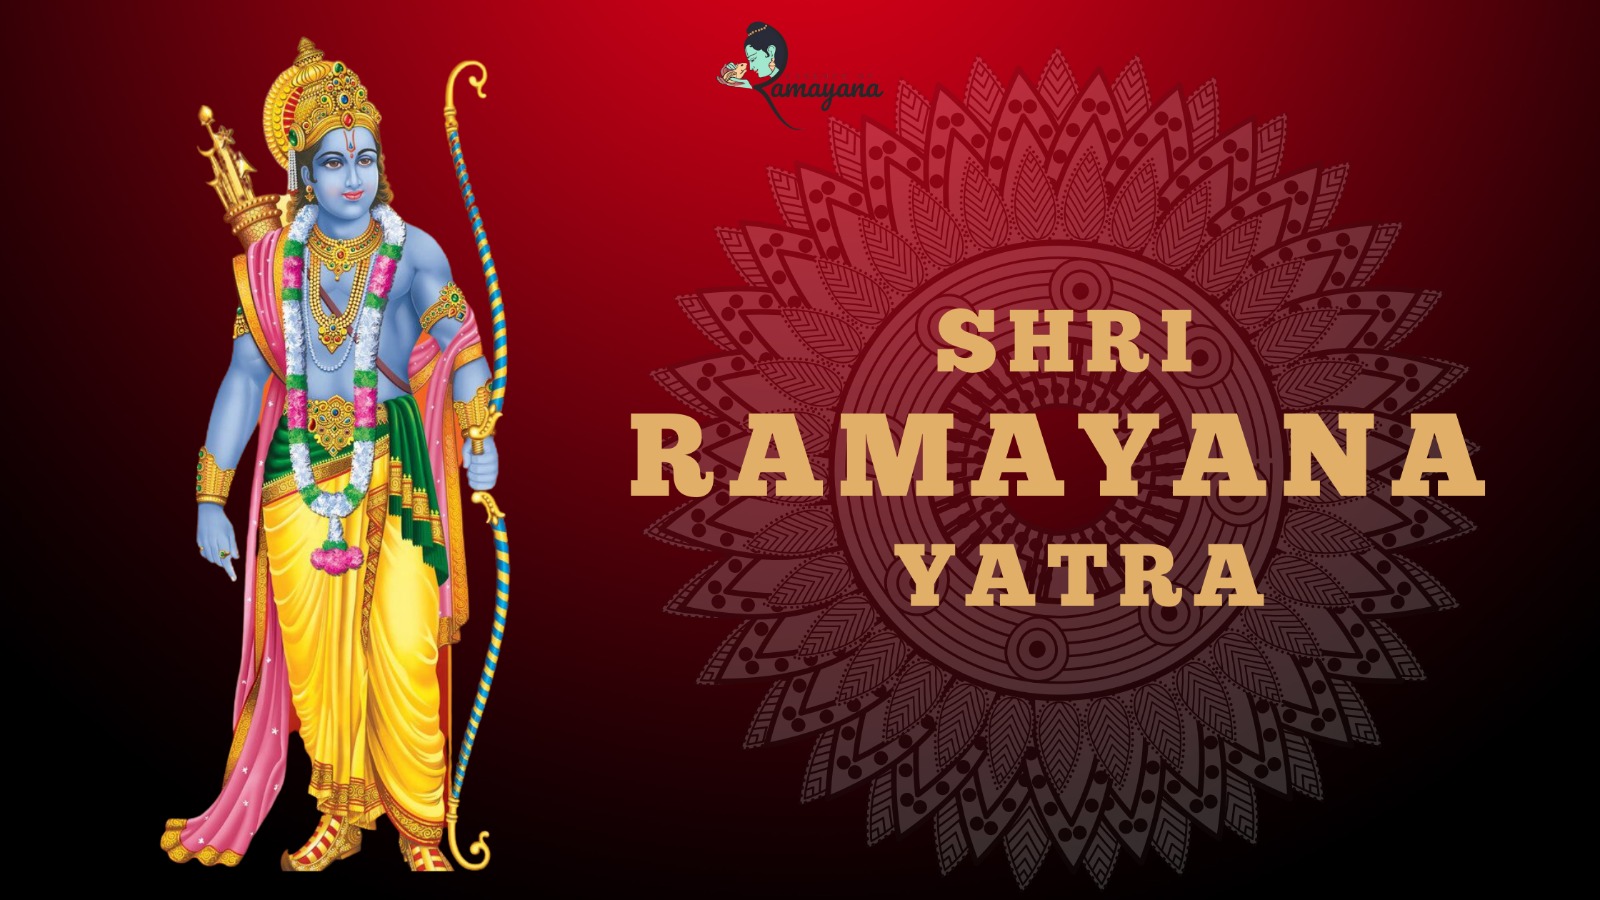 Ramayana Yatra: A Journey Through Mythical India